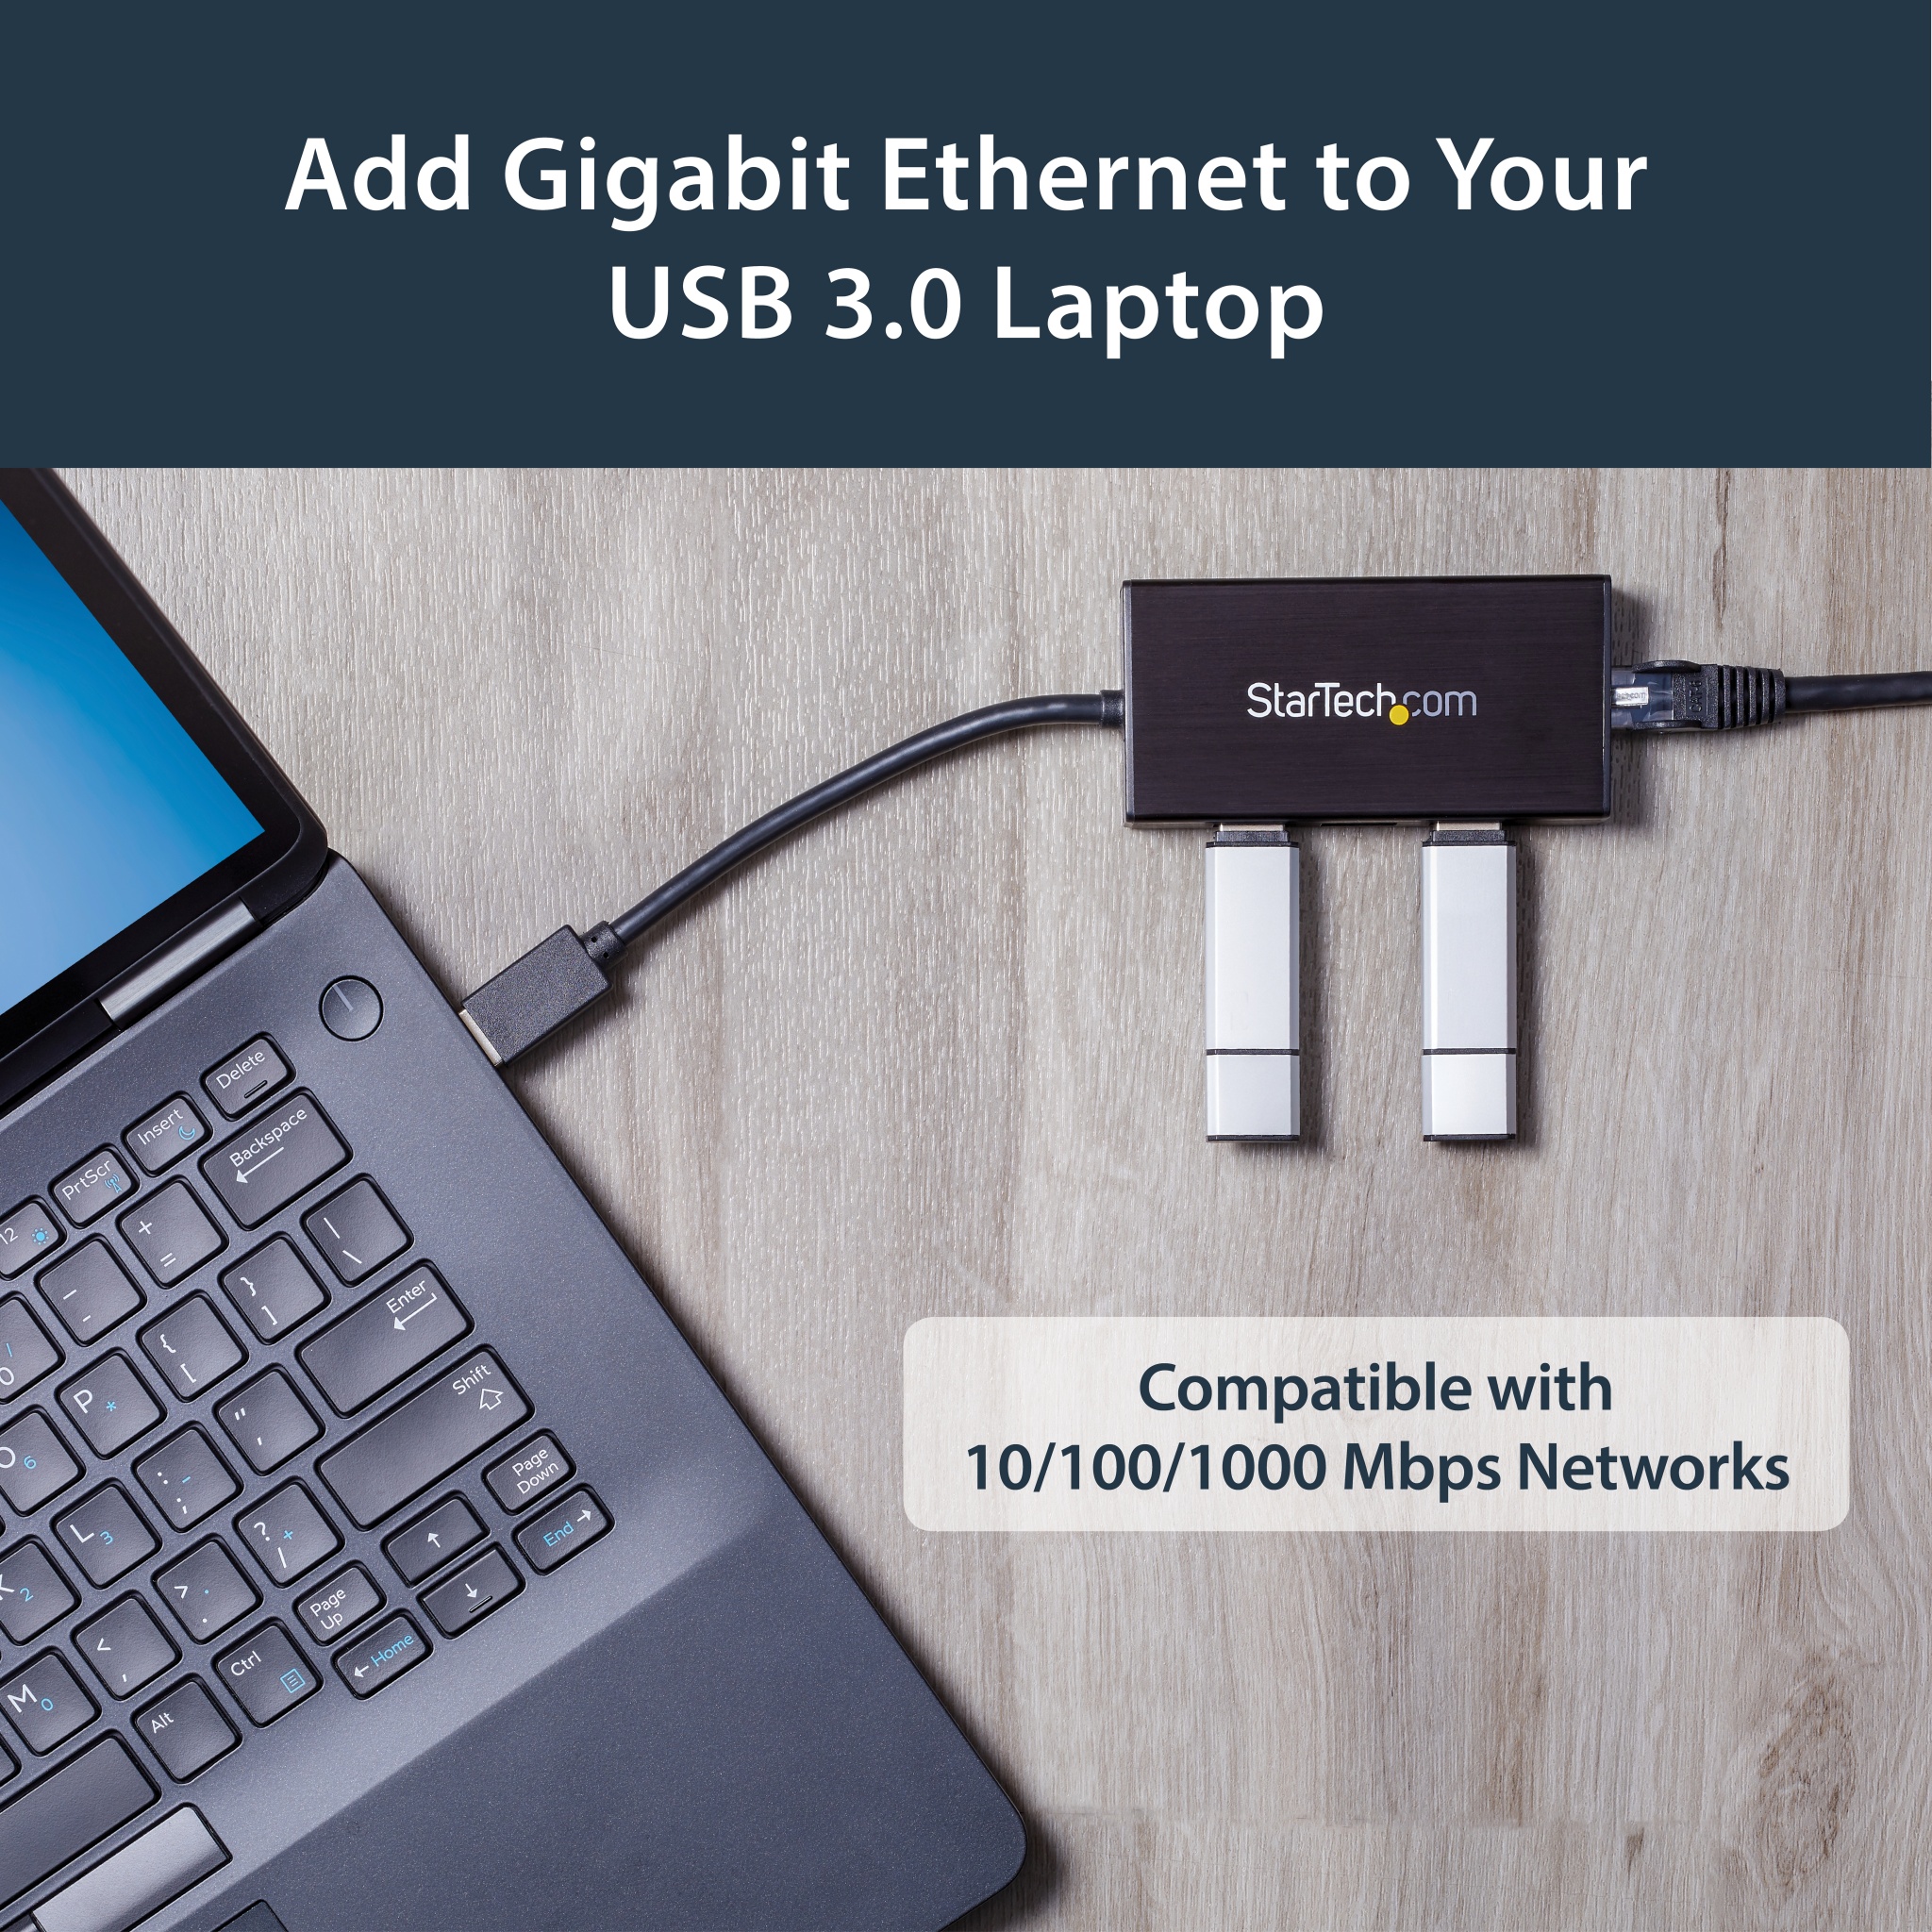 StarTech.com 3 Port USB 3.0 Hub with Gigabit Ethernet Adapter NIC, Portable  - ST3300GU3B - USB Hubs 